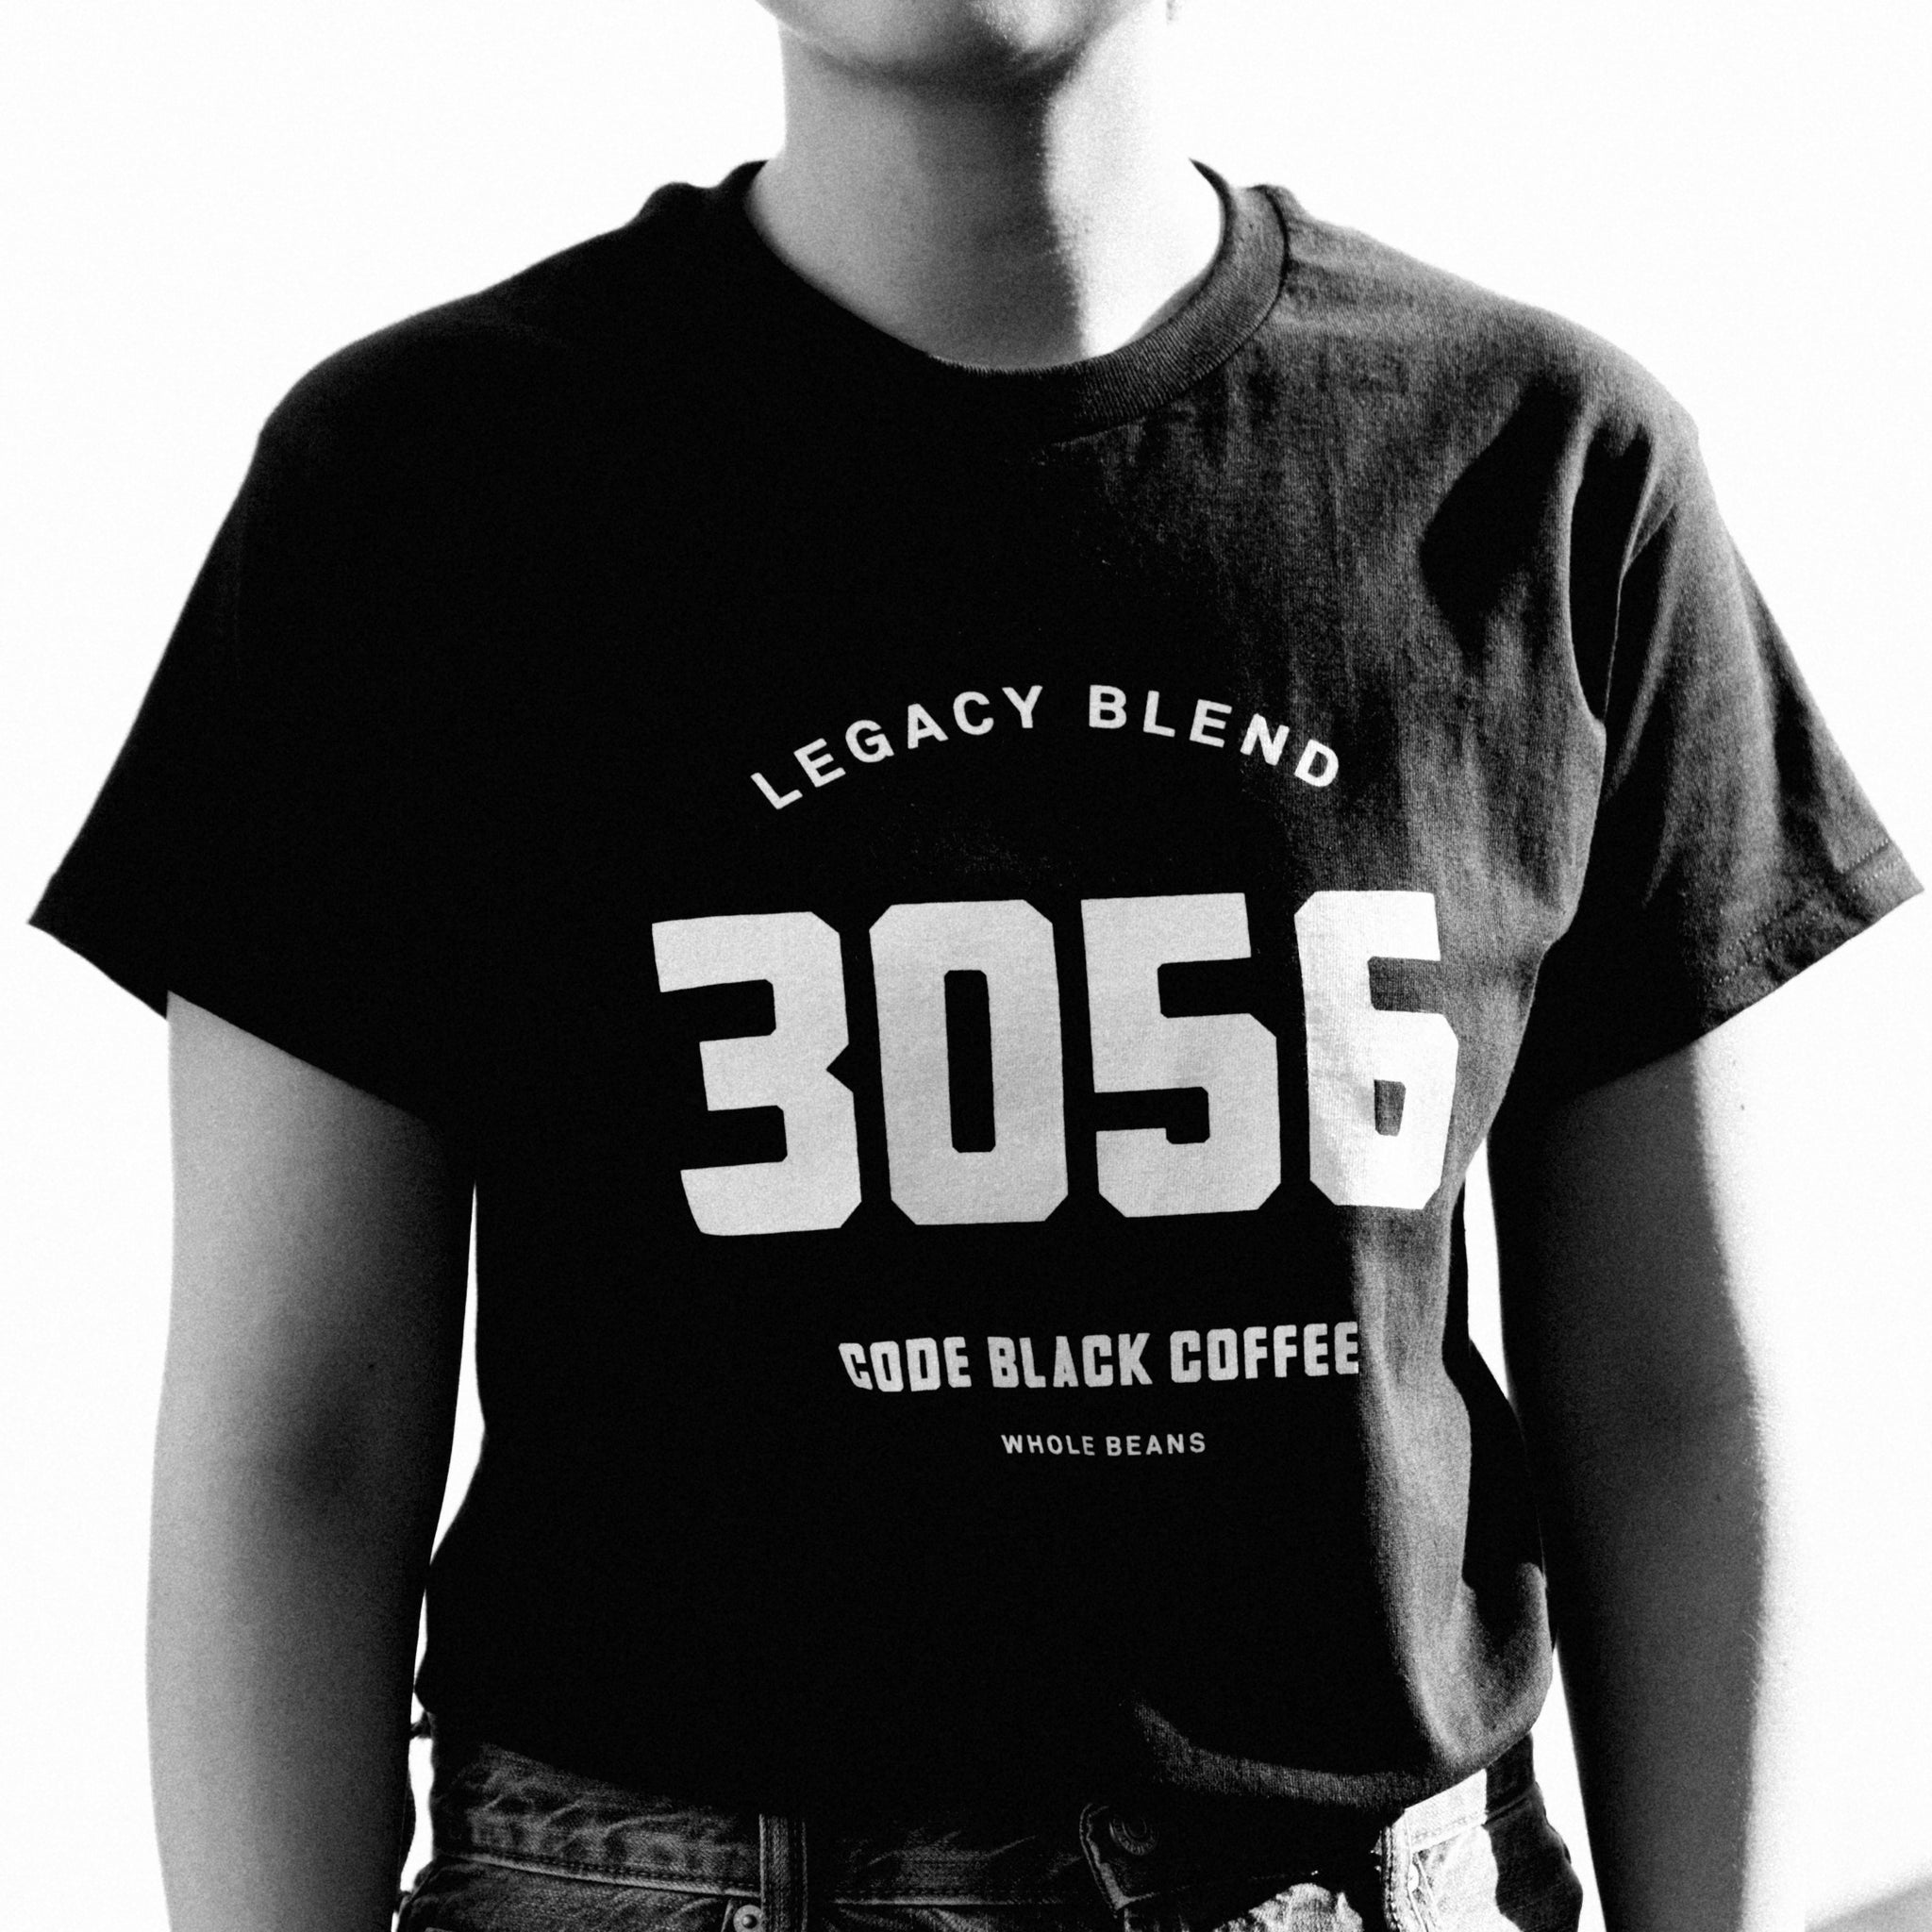 Code Black Coffee '3056' Crew Neck T-Shirt